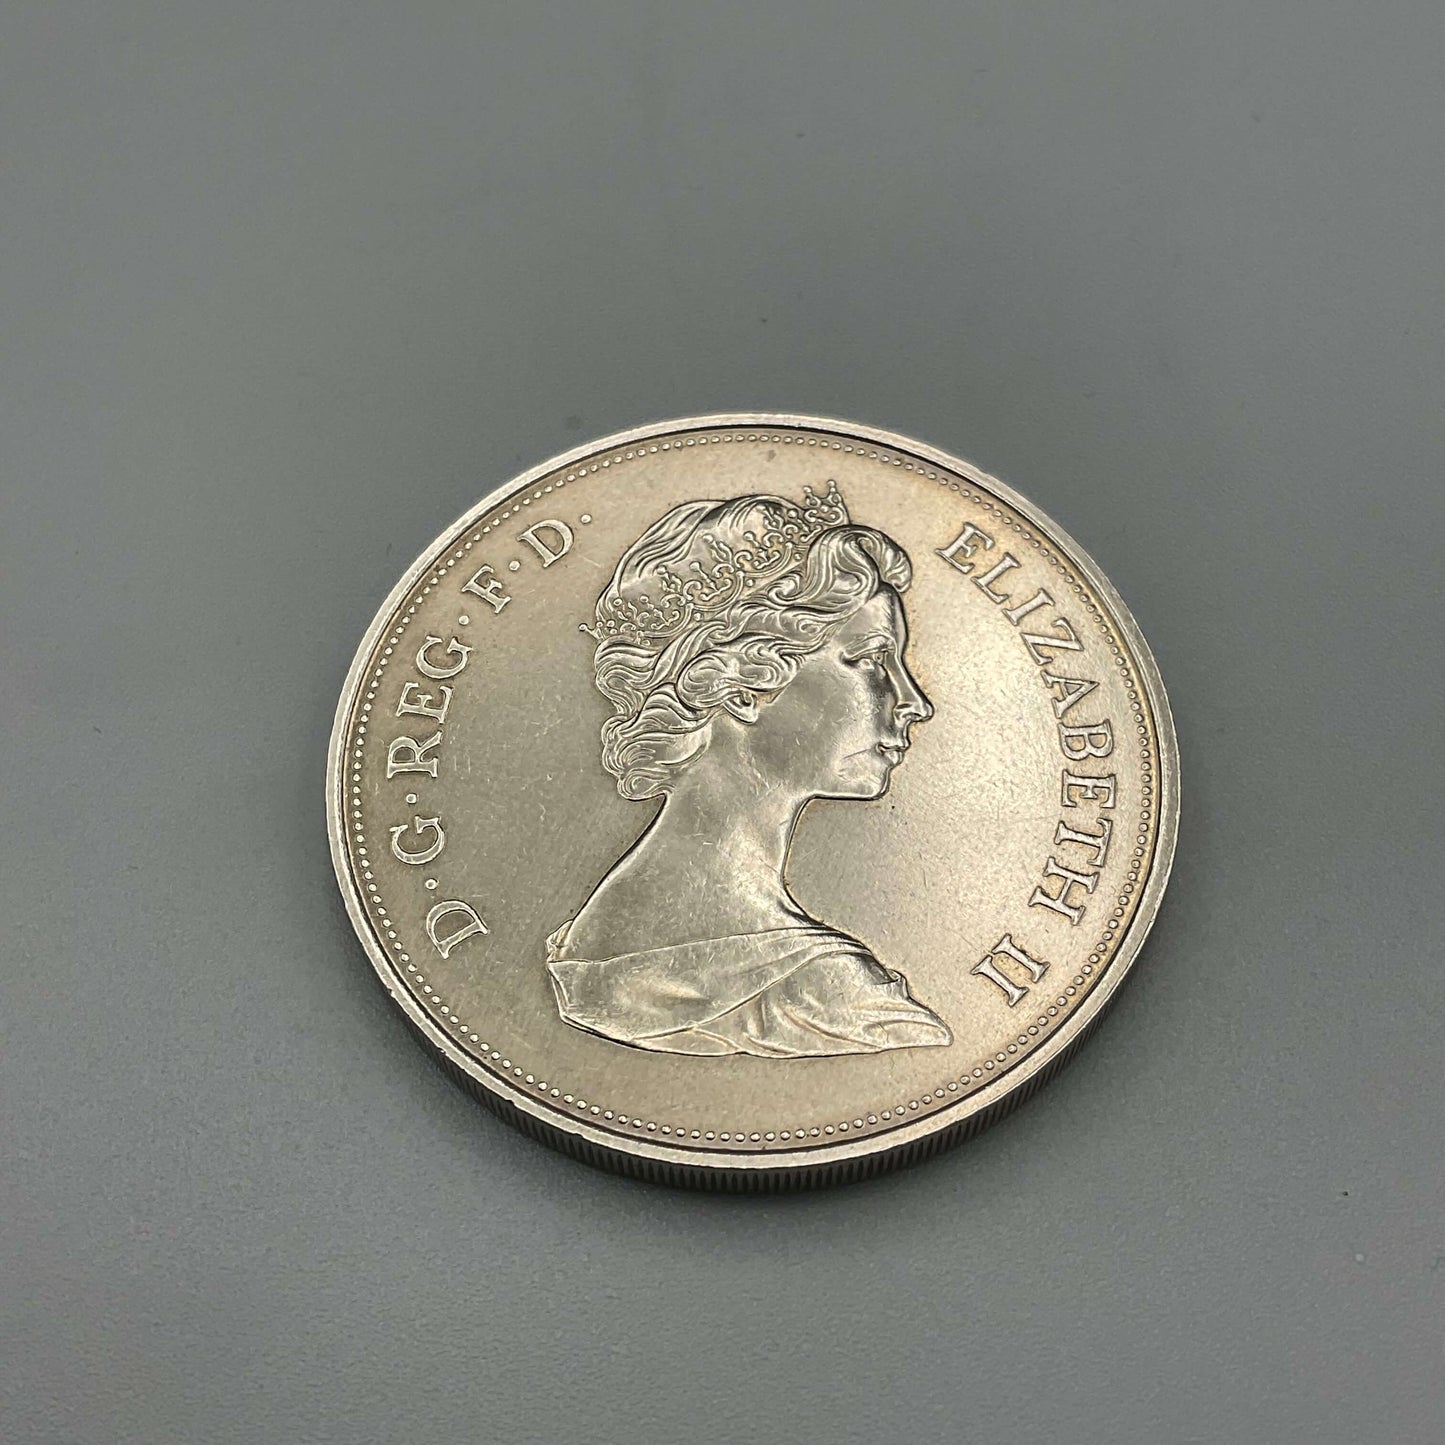 Queens 1972 Silver Wedding Anniversary Crown Coin